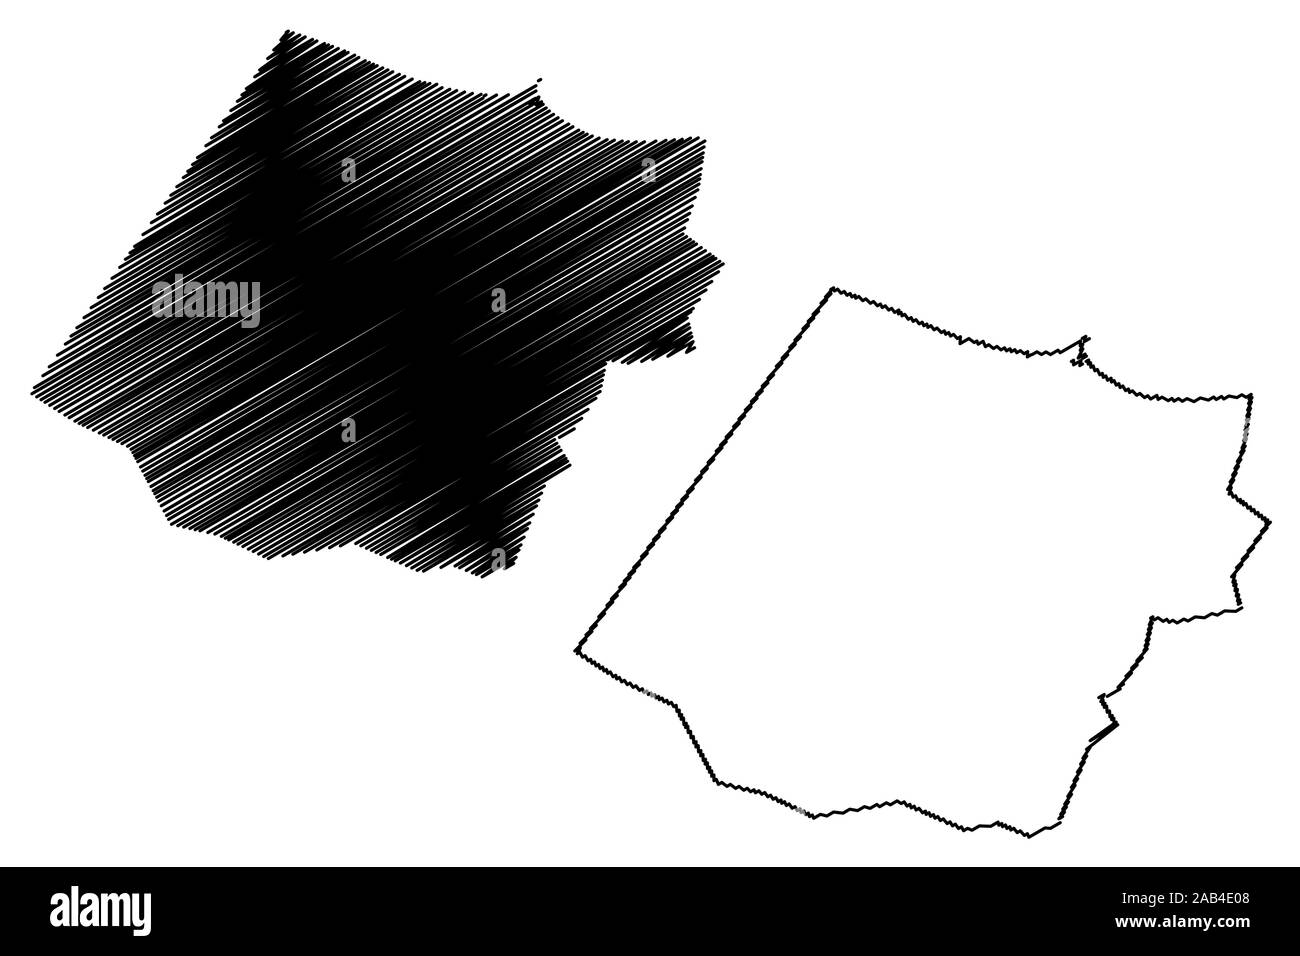 Al Batinah South Governorate (Sultanat Oman, Gouvernements von Oman) Karte Vektor-illustration, kritzeln Skizze Al Batinah Süd Karte Stock Vektor